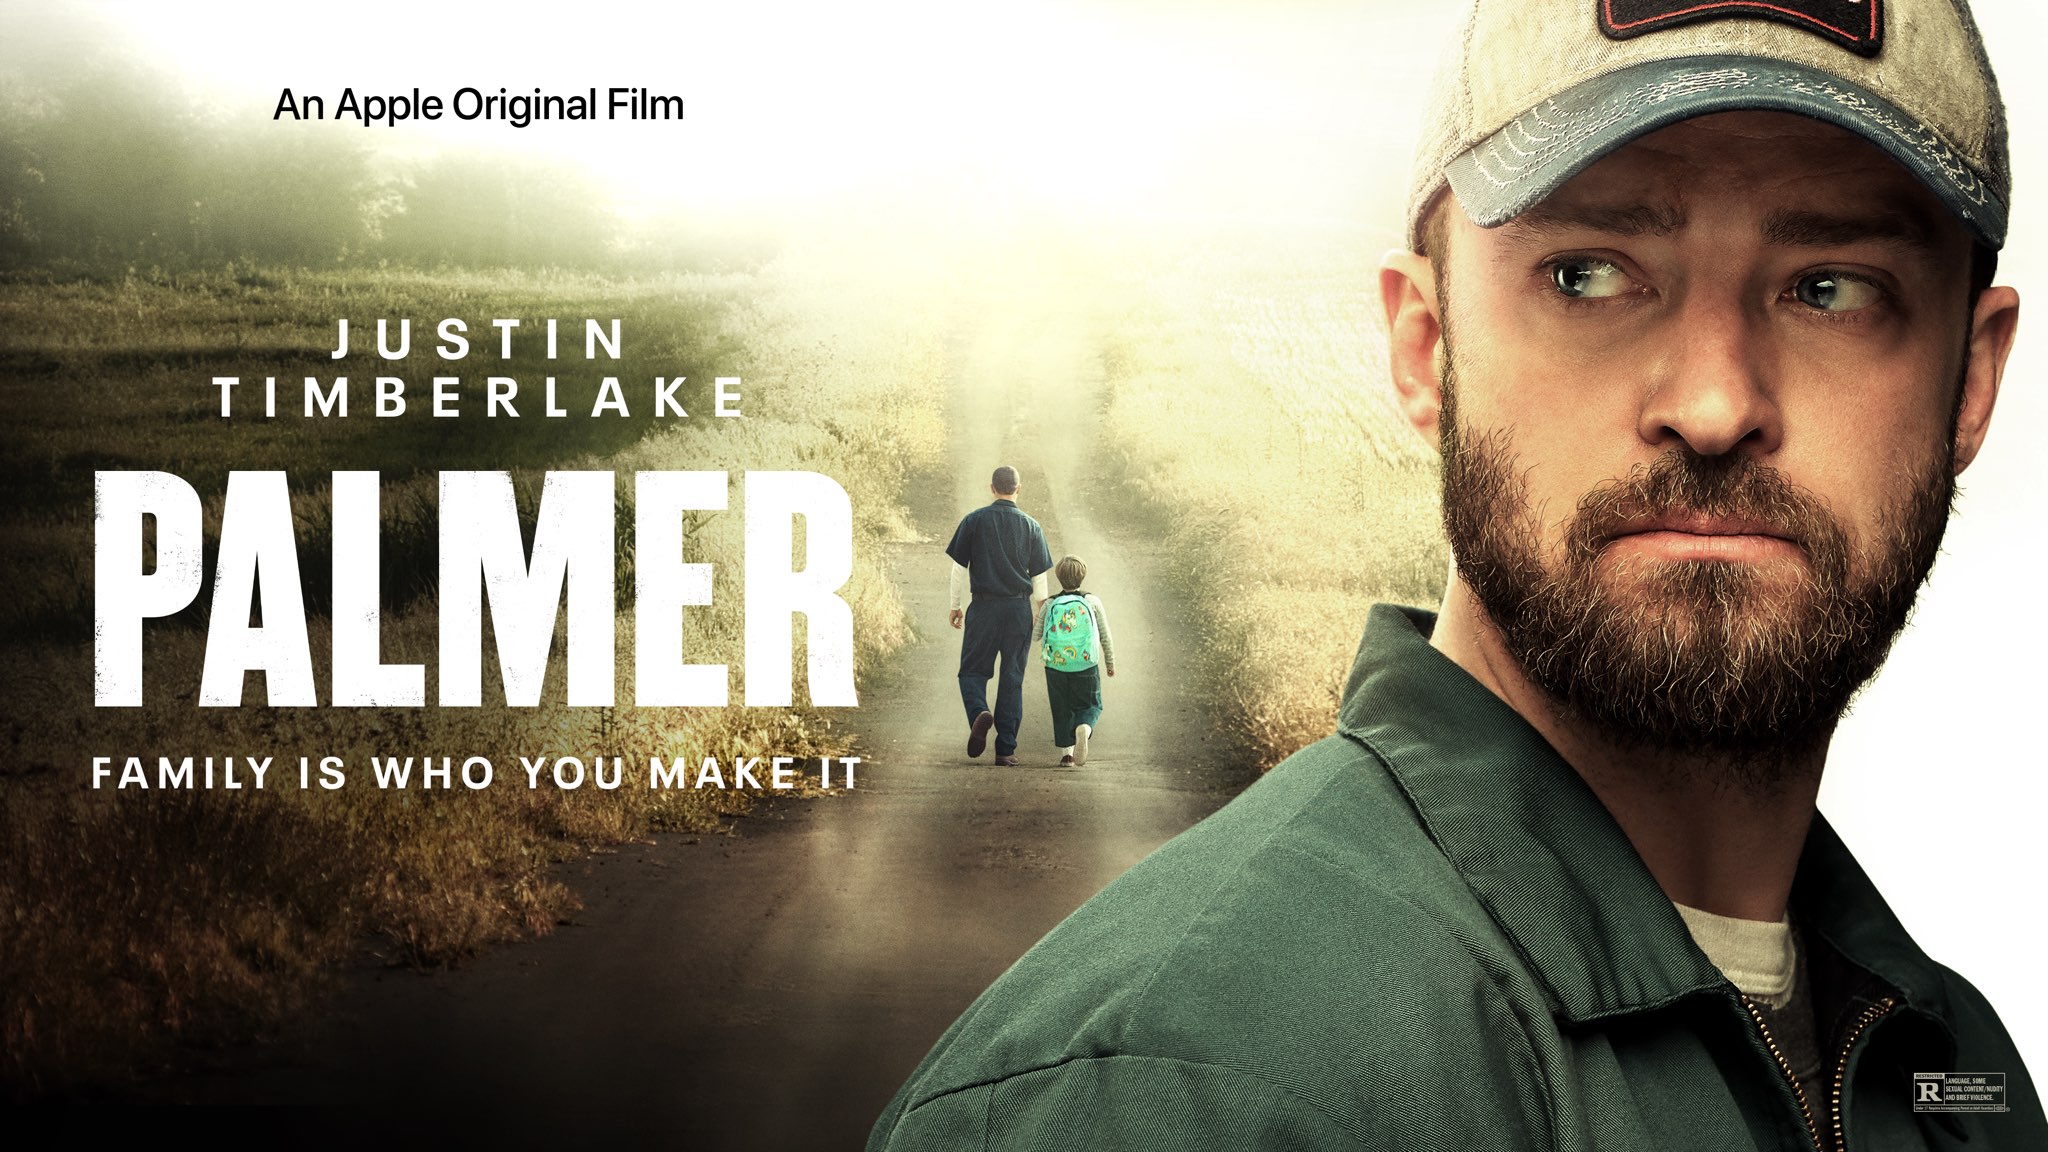 The original drama “Palmer” starring Justin Timberlake is now streaming